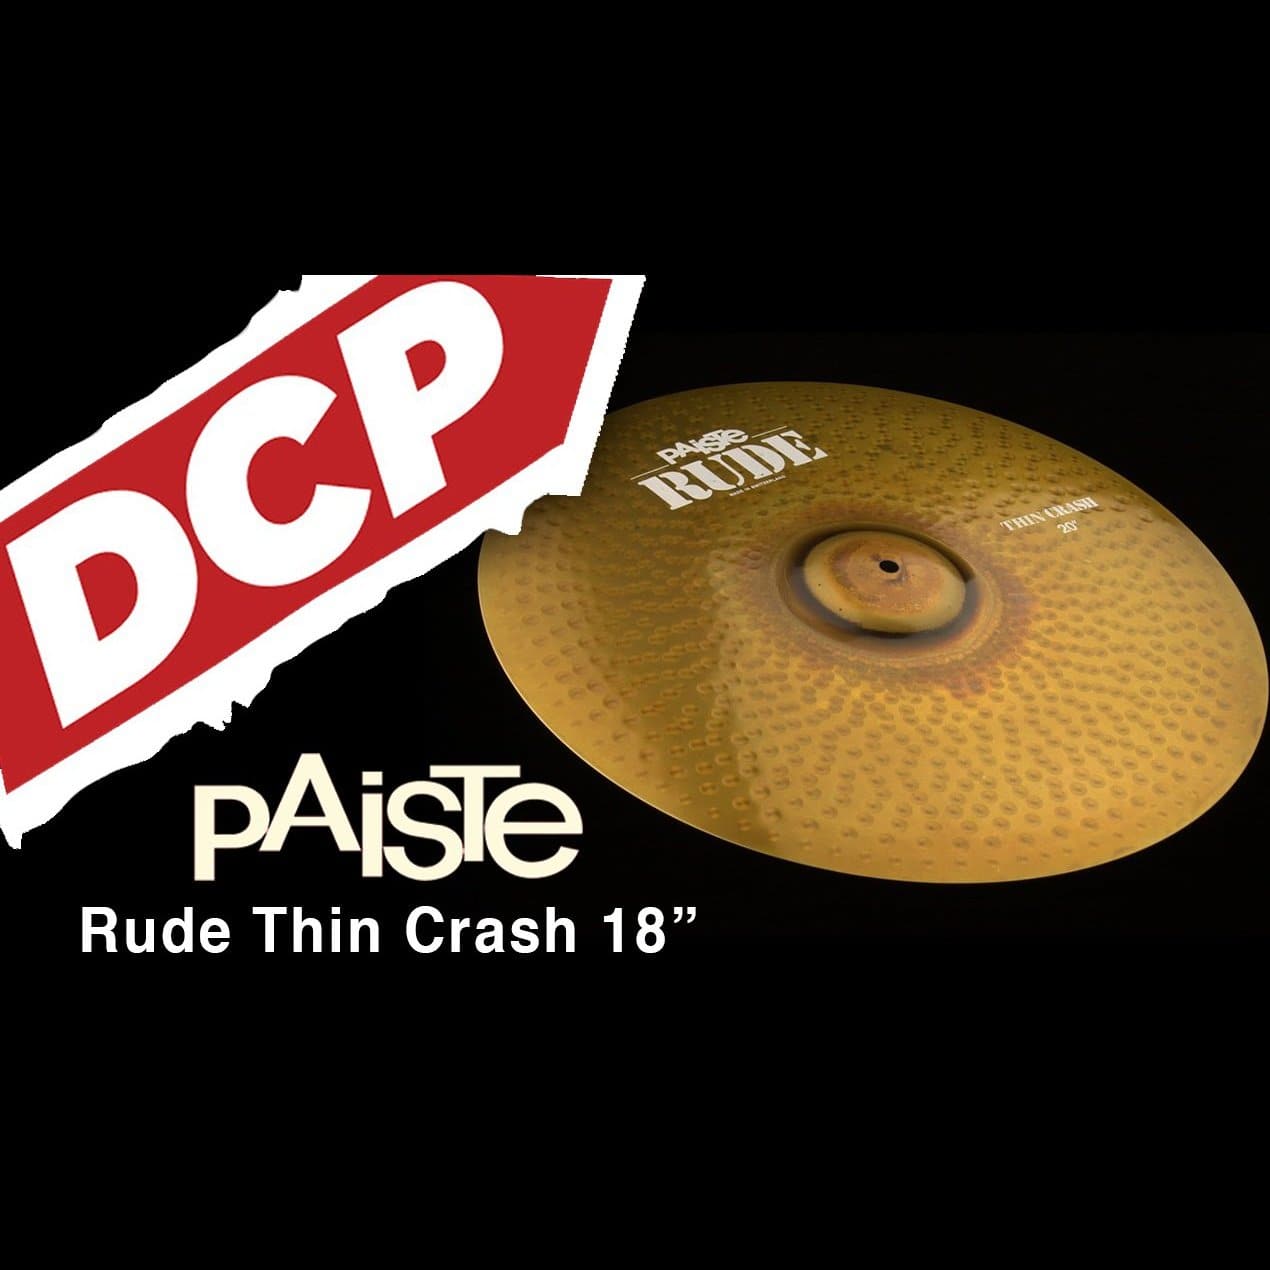 Paiste Rude Thin Crash Cymbal 18